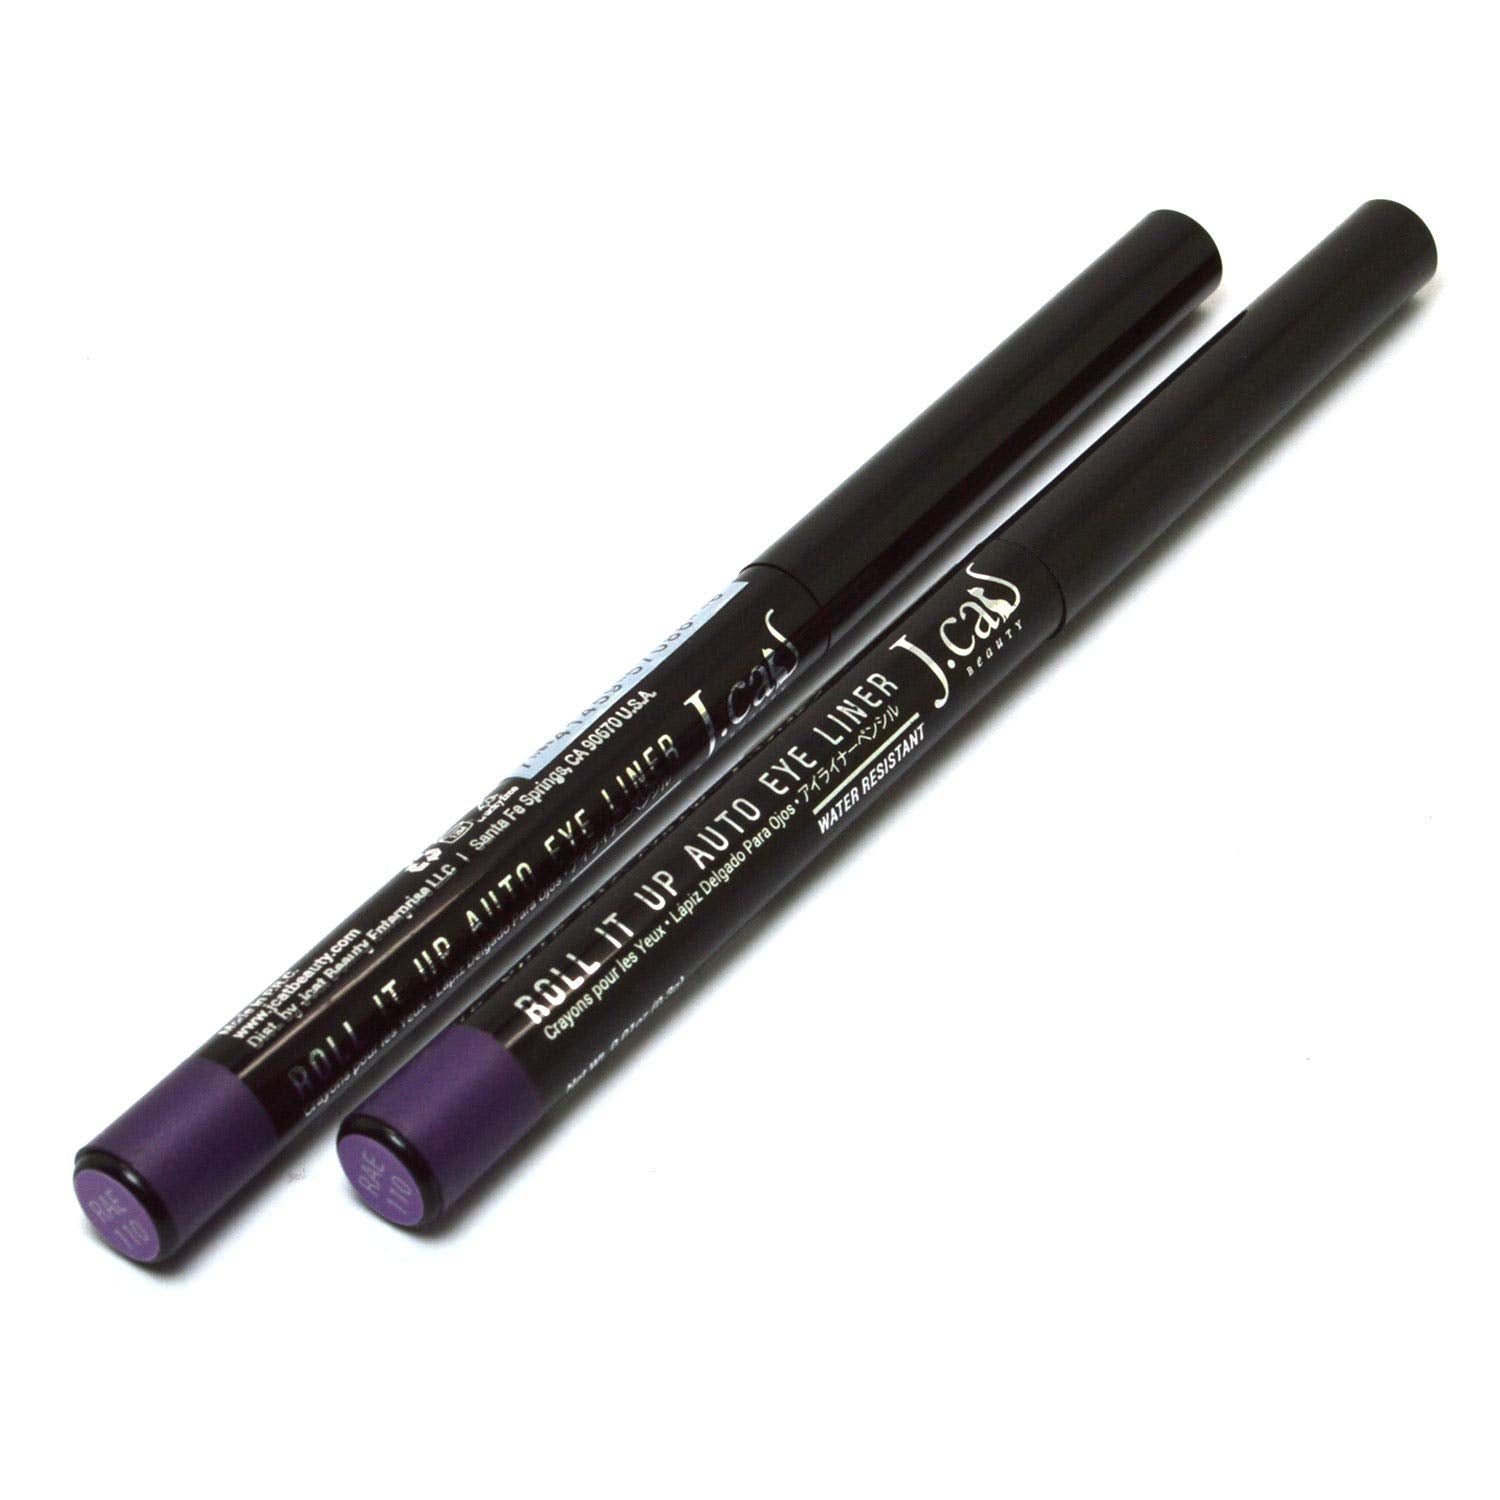 Jcat Beauty 2pcs x RAE110 Lavender Roll it Up Eye Liner Eyeliner Pencil + Free Zipbag